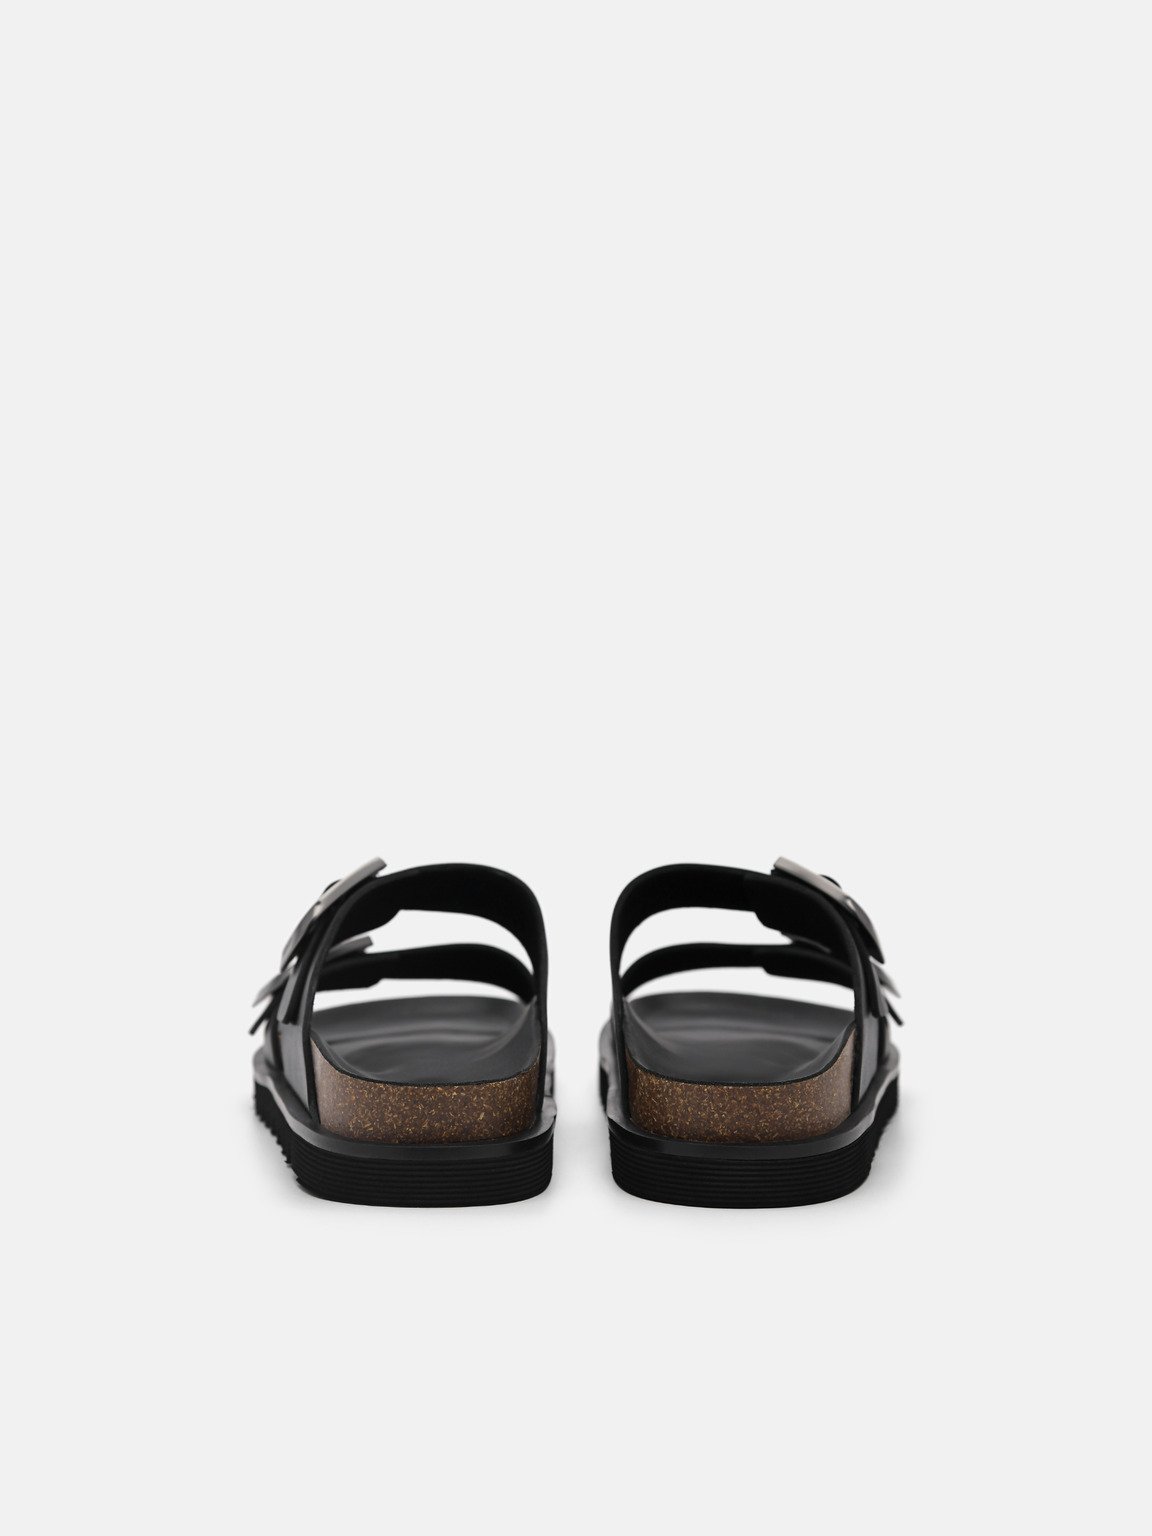 Women's Helix Sandals, Black